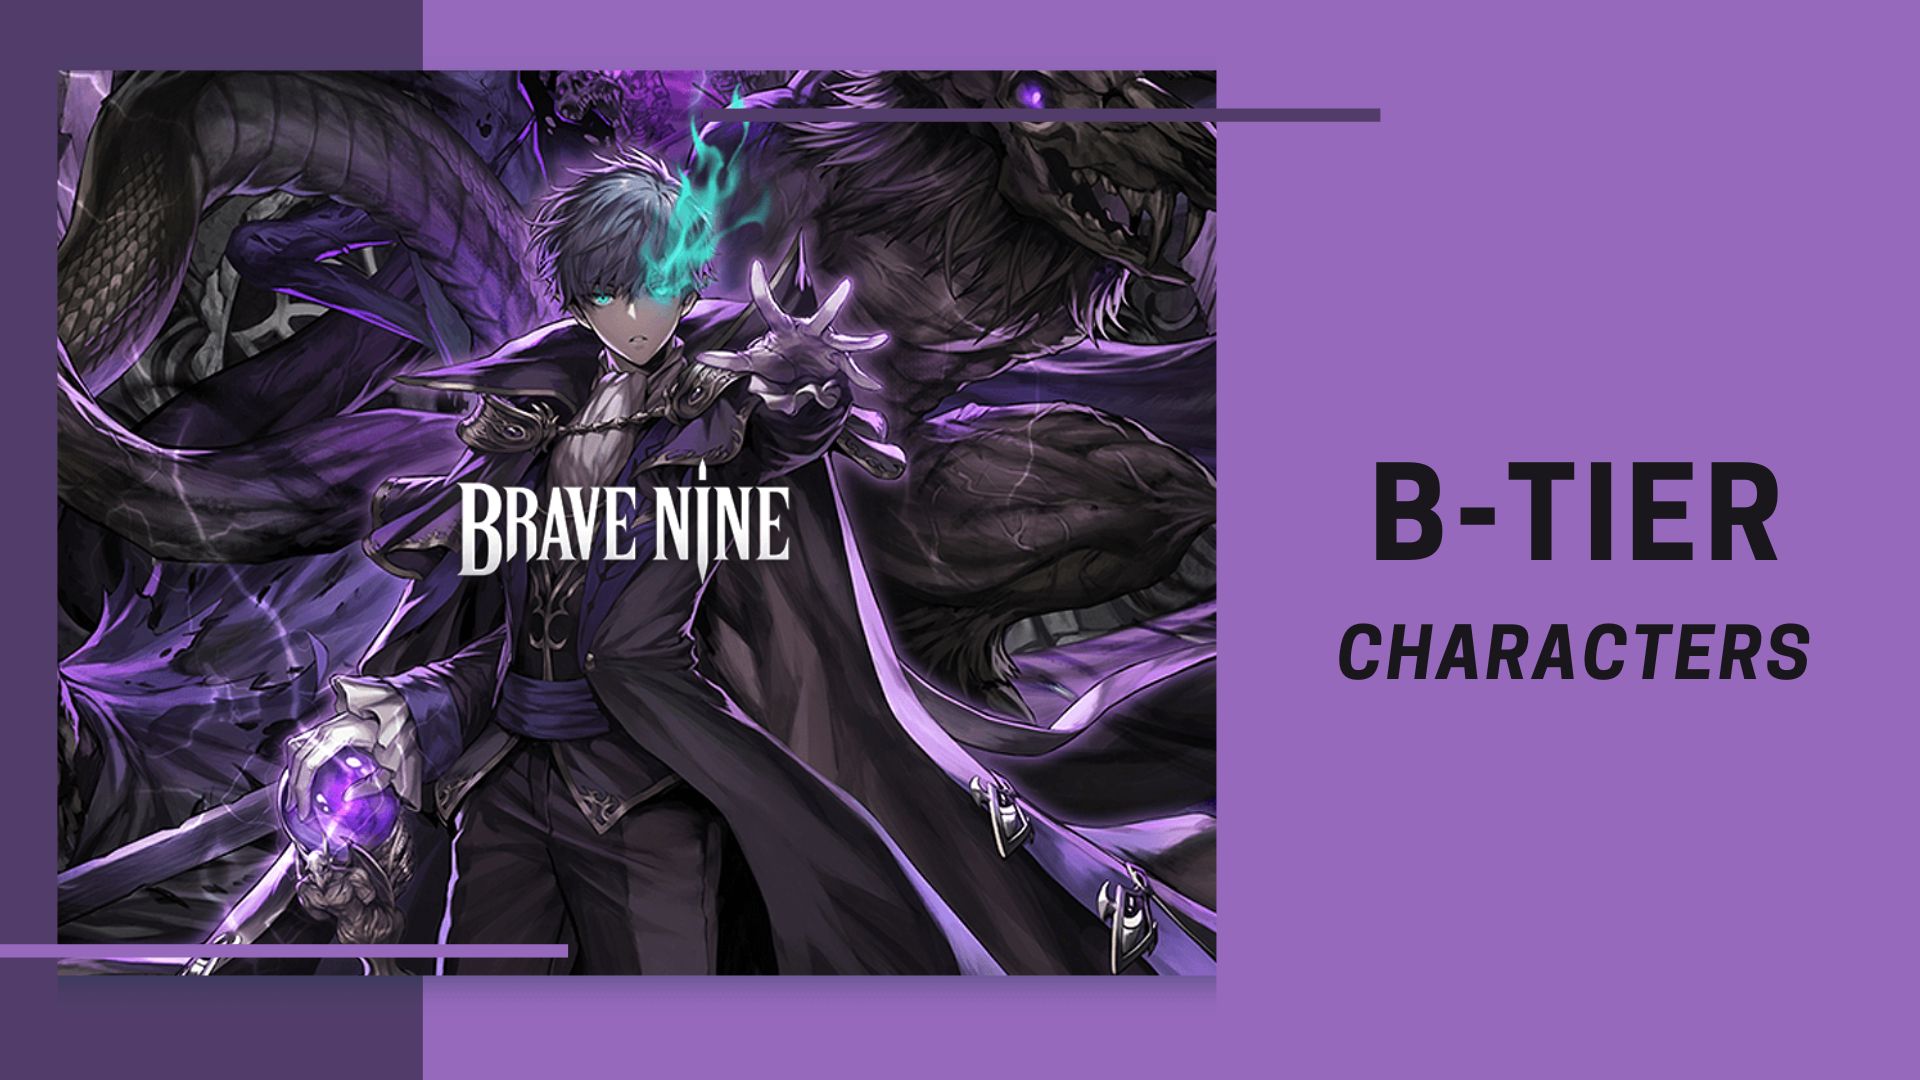 Brave Nine on Steam